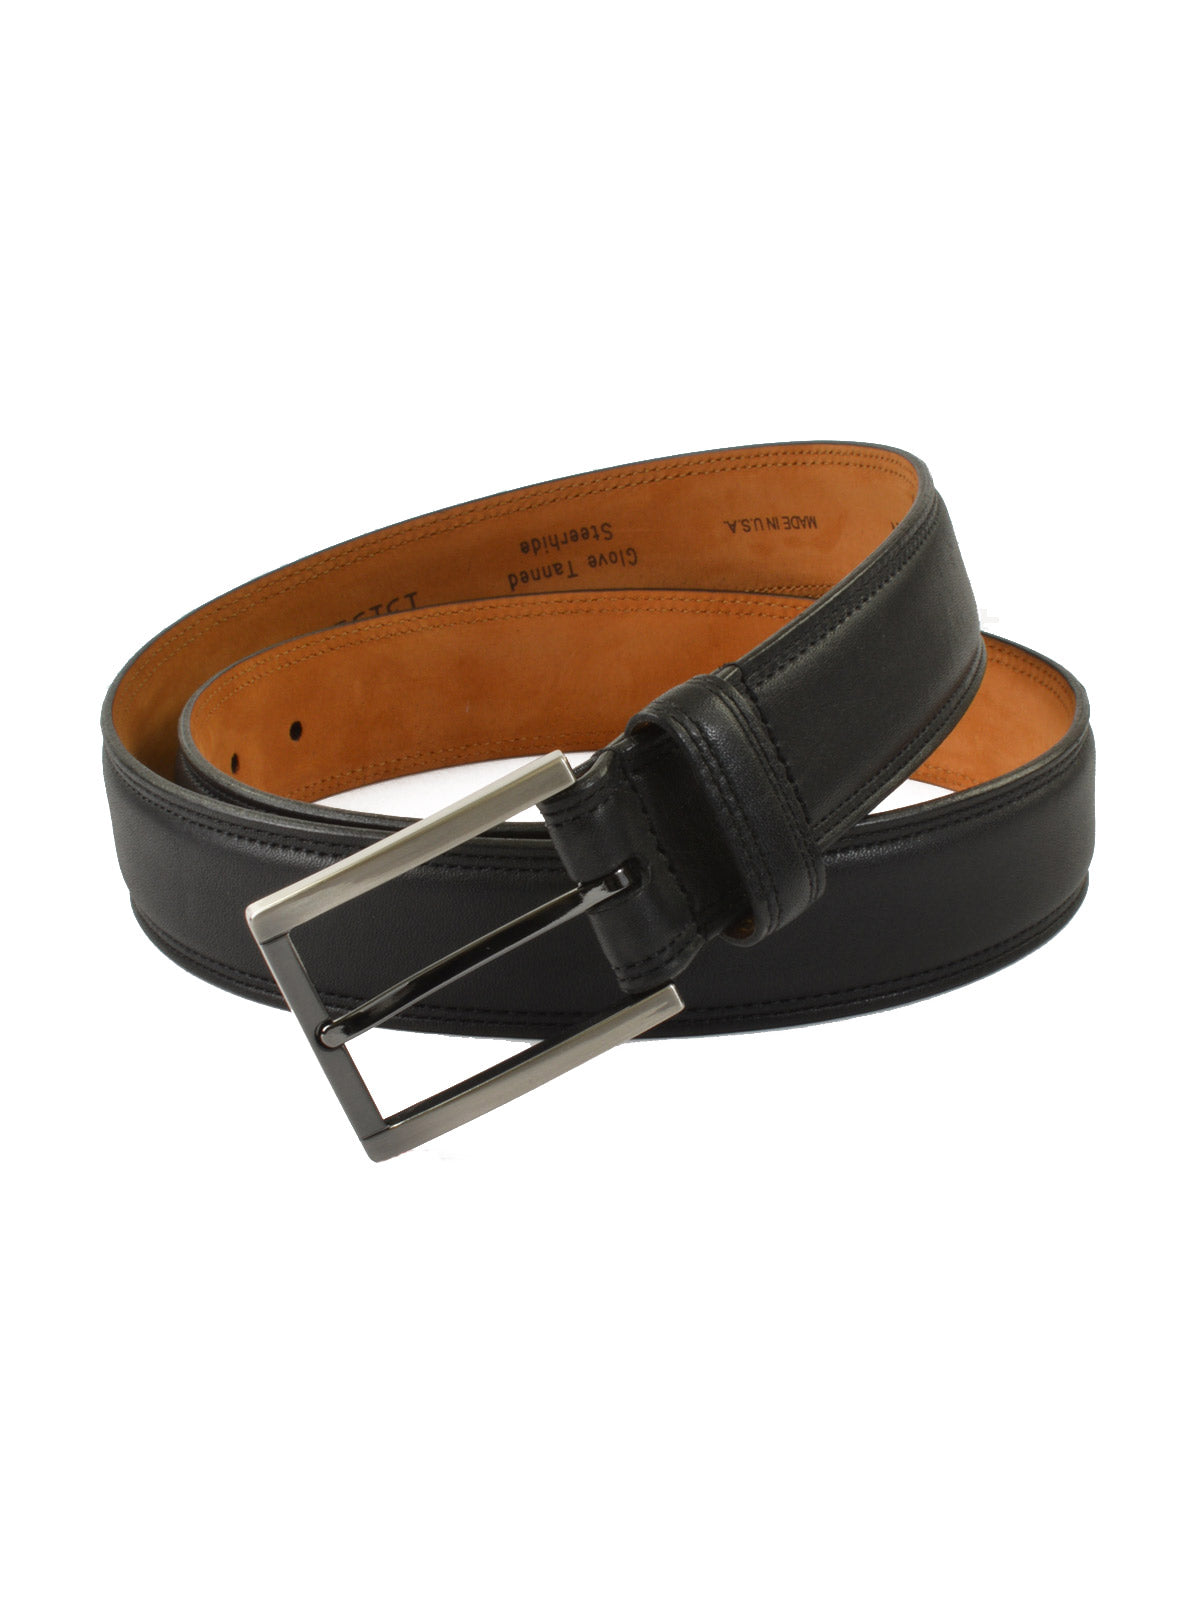 Lejon Glove Tanned Leather Dignitary Belts in Black - Regular Sizes